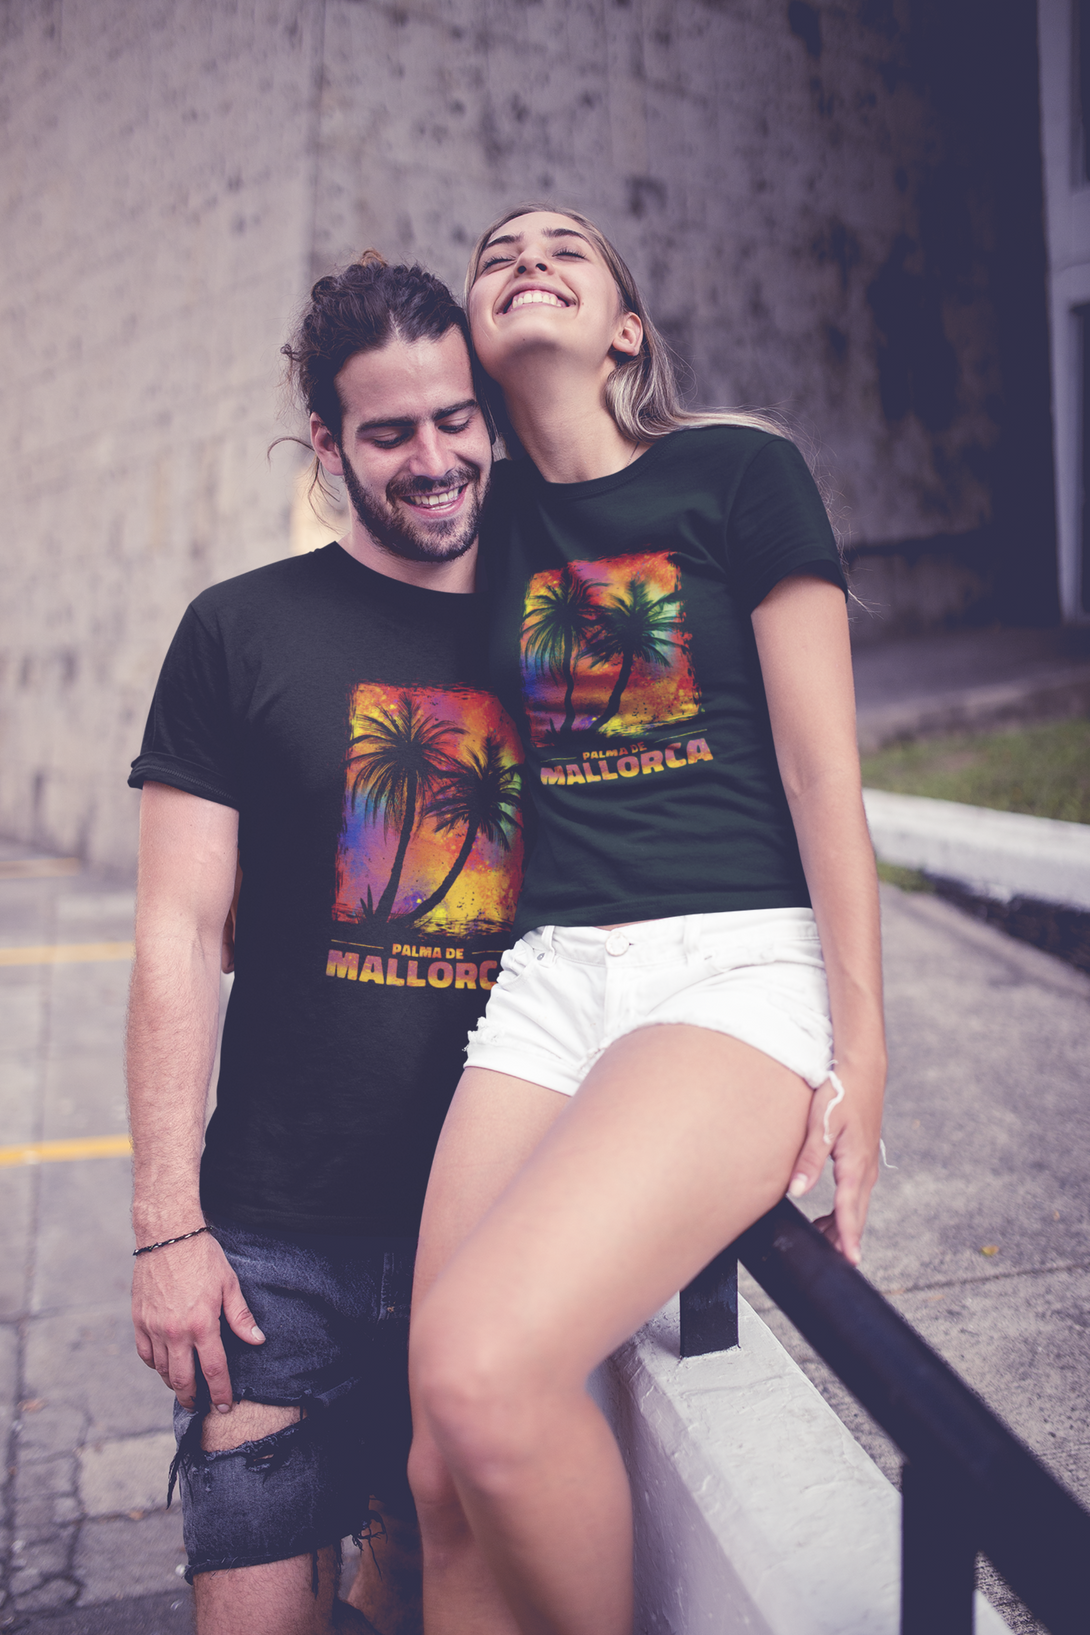 Palma De Mallorca Printed T-Shirt For Men - WowWaves - 8